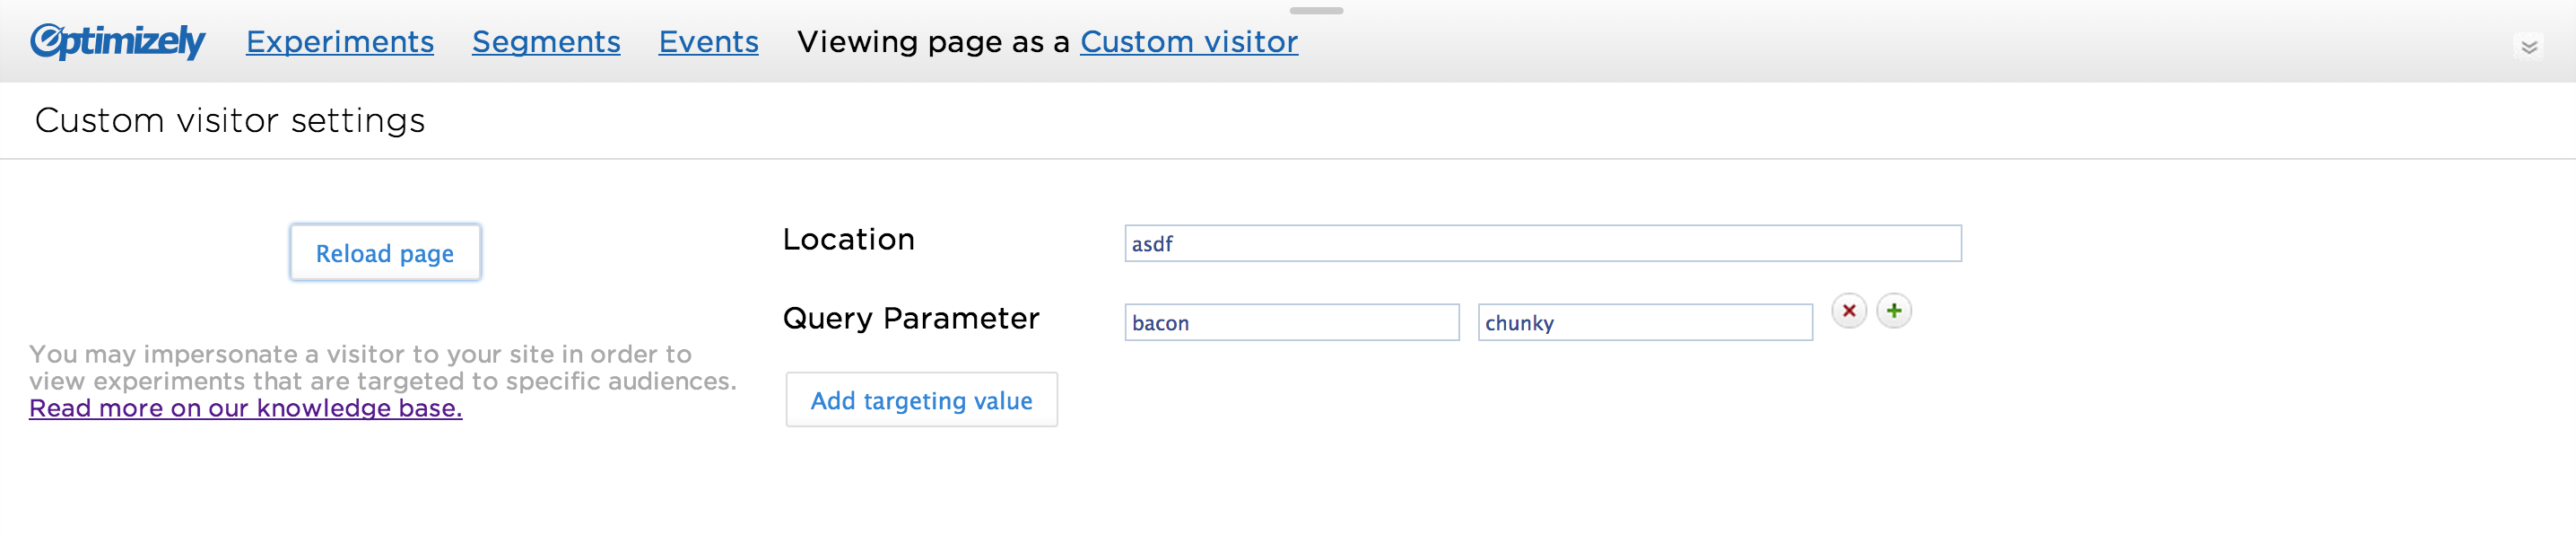 Almost final screenshot of adding custom visitor attributes